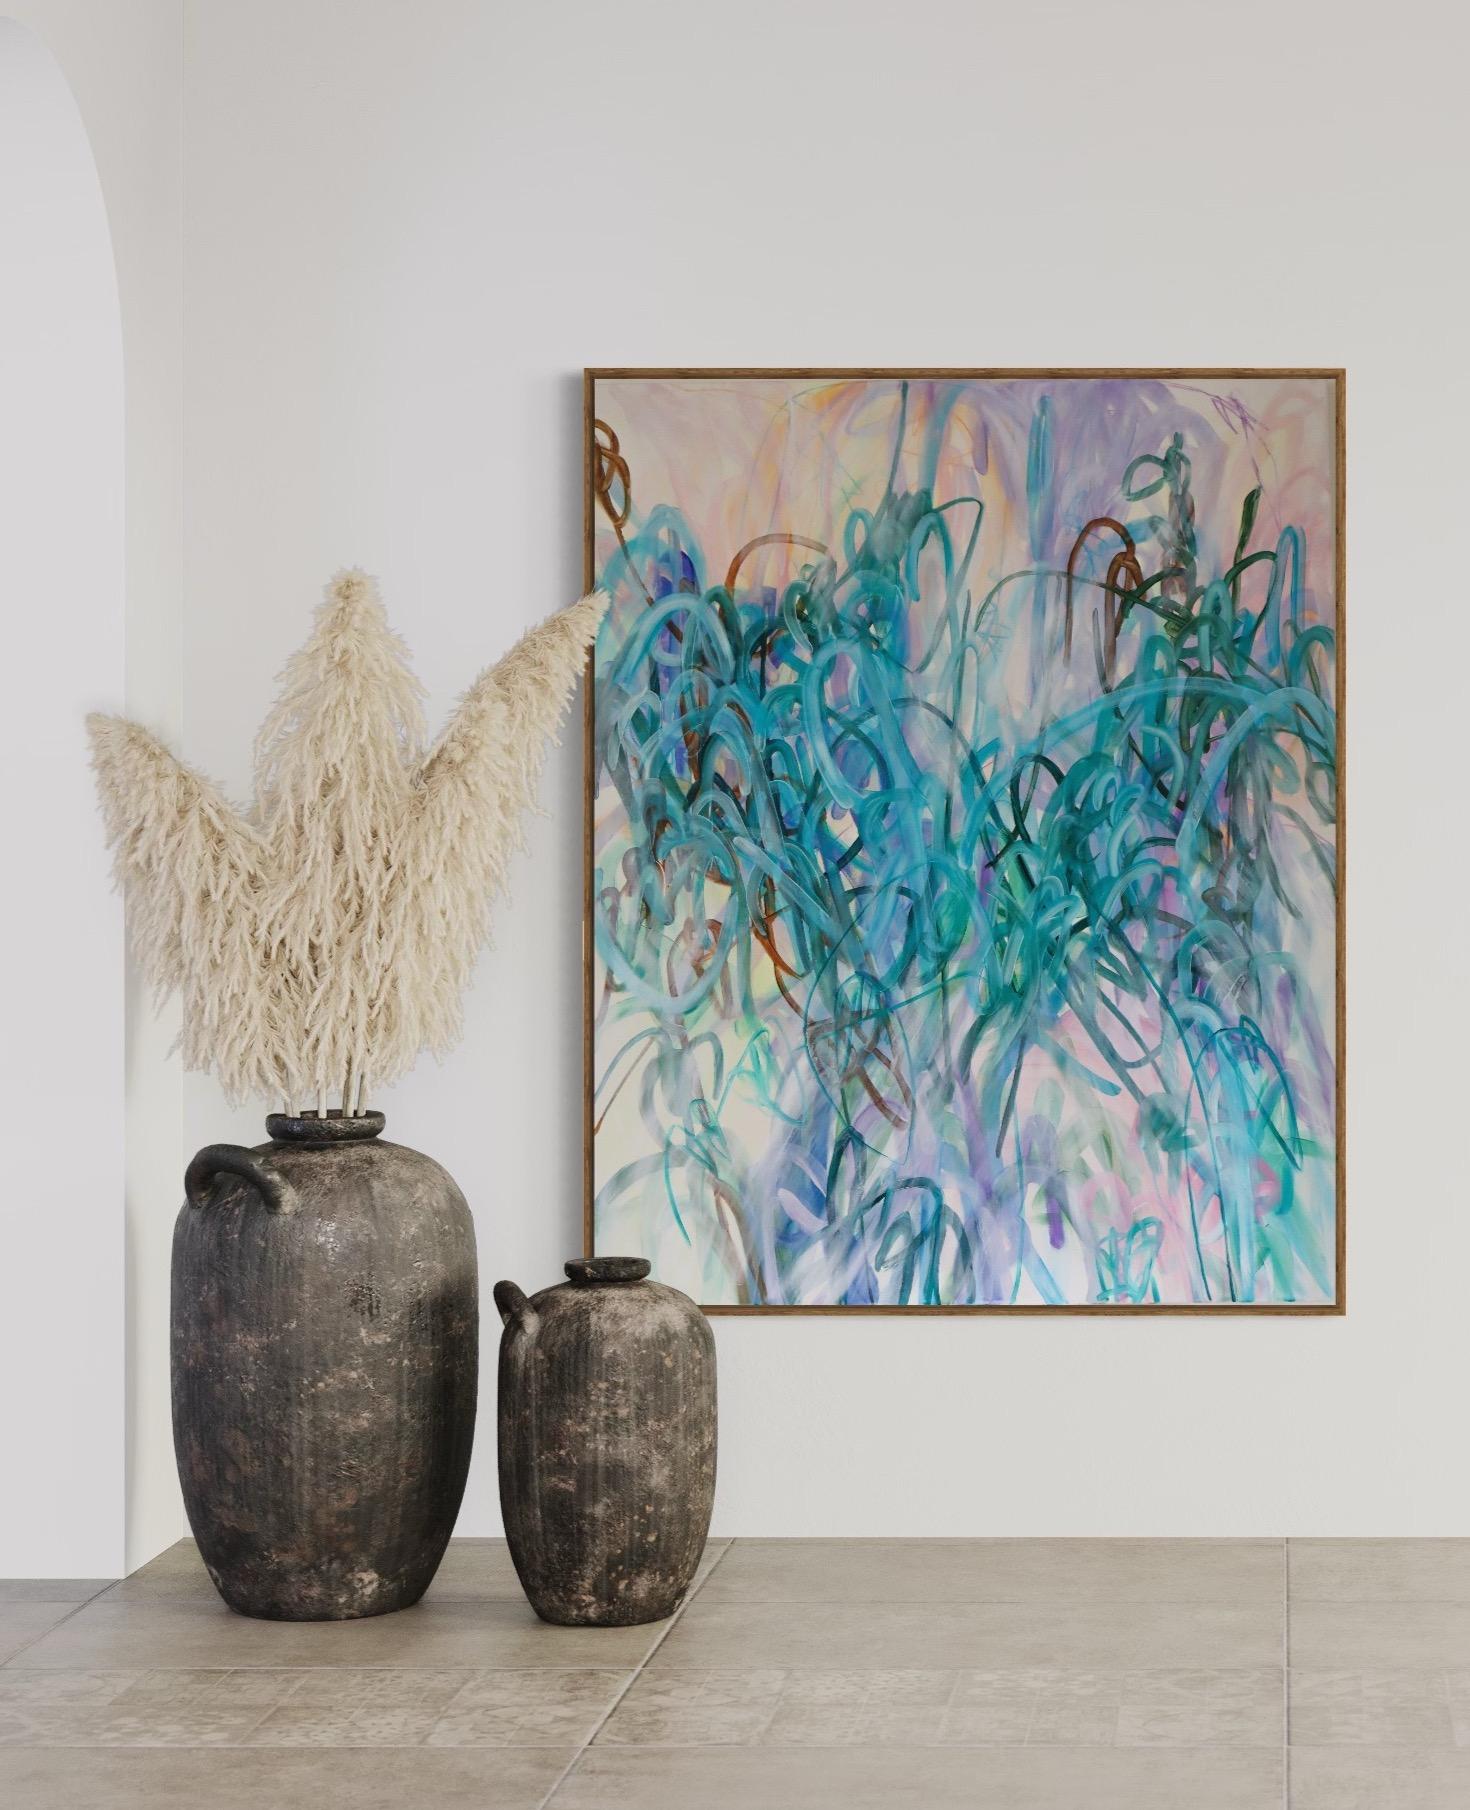 „Emotional Release“ Öl, Acryl und Öl, Pastell, Abstrakt, 150 x 120 cm (Abstrakter Expressionismus), Mixed Media Art, von Elin Kereby